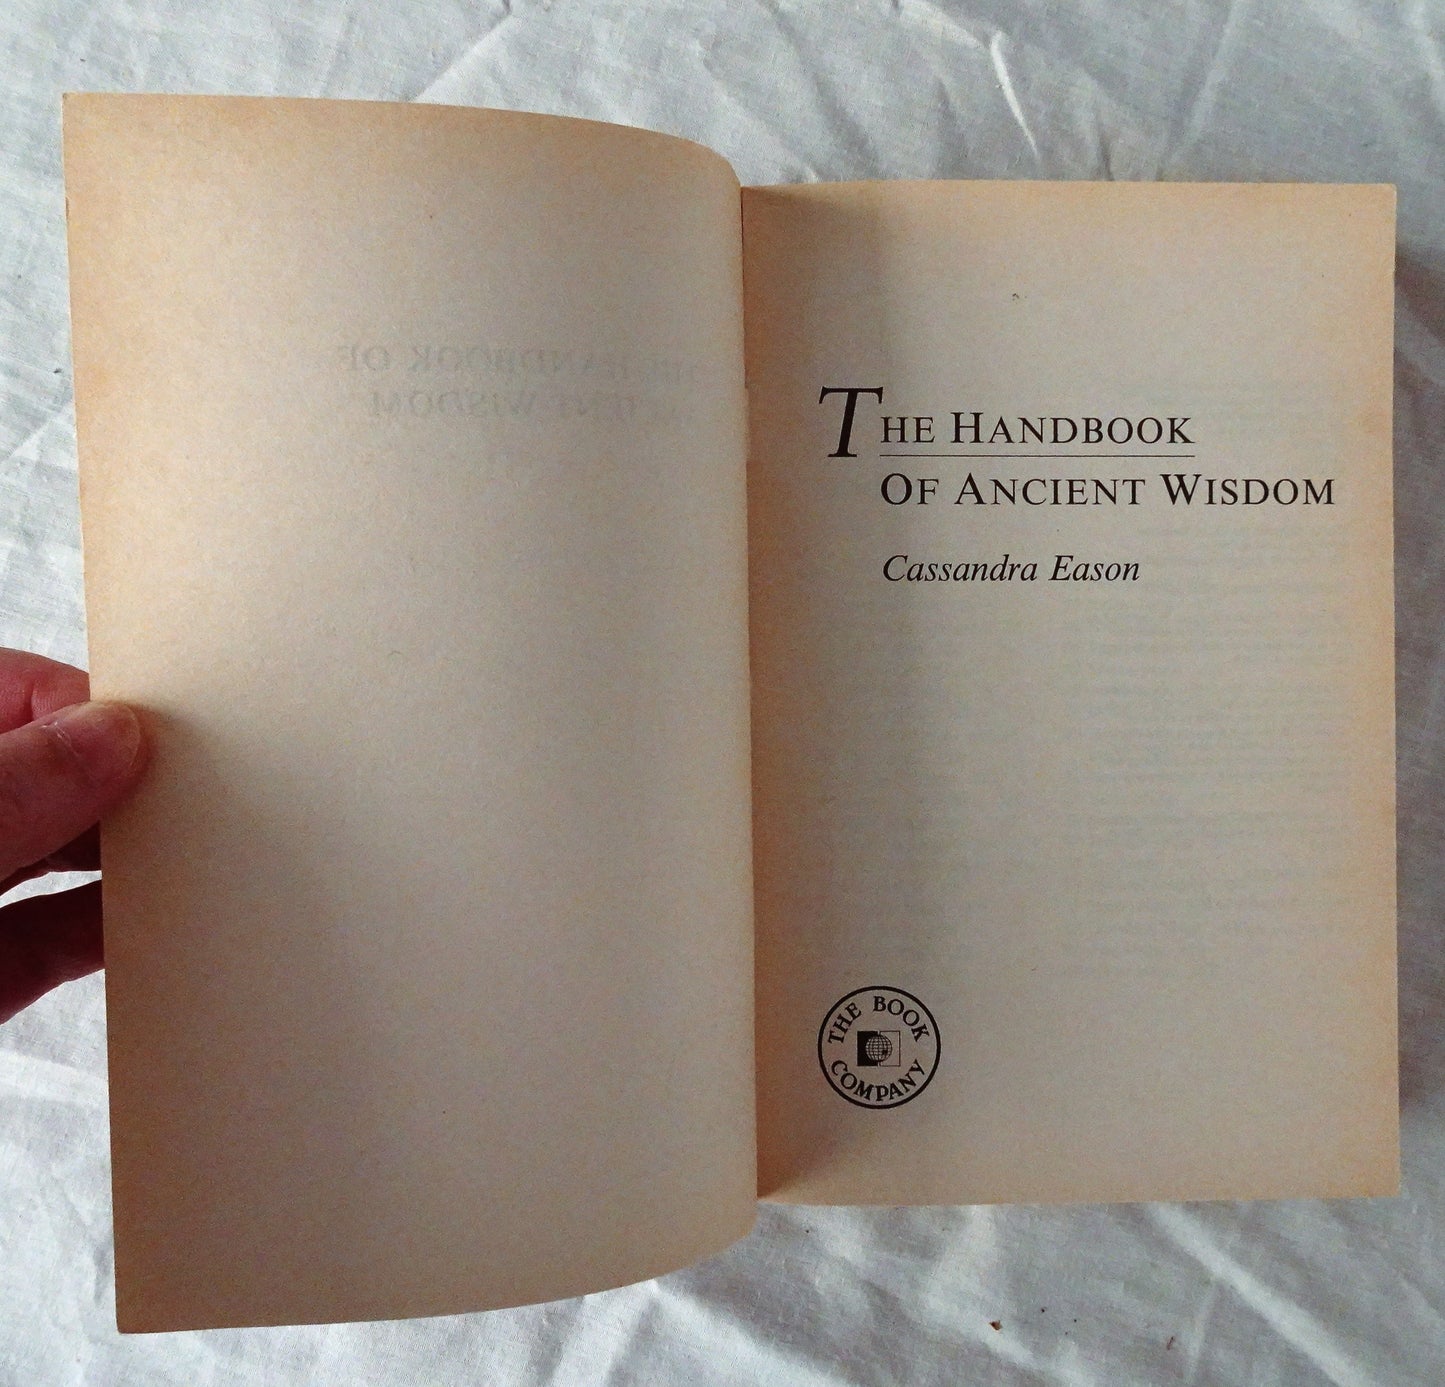 The Handbook of Ancient Wisdom by Cassandra Eason